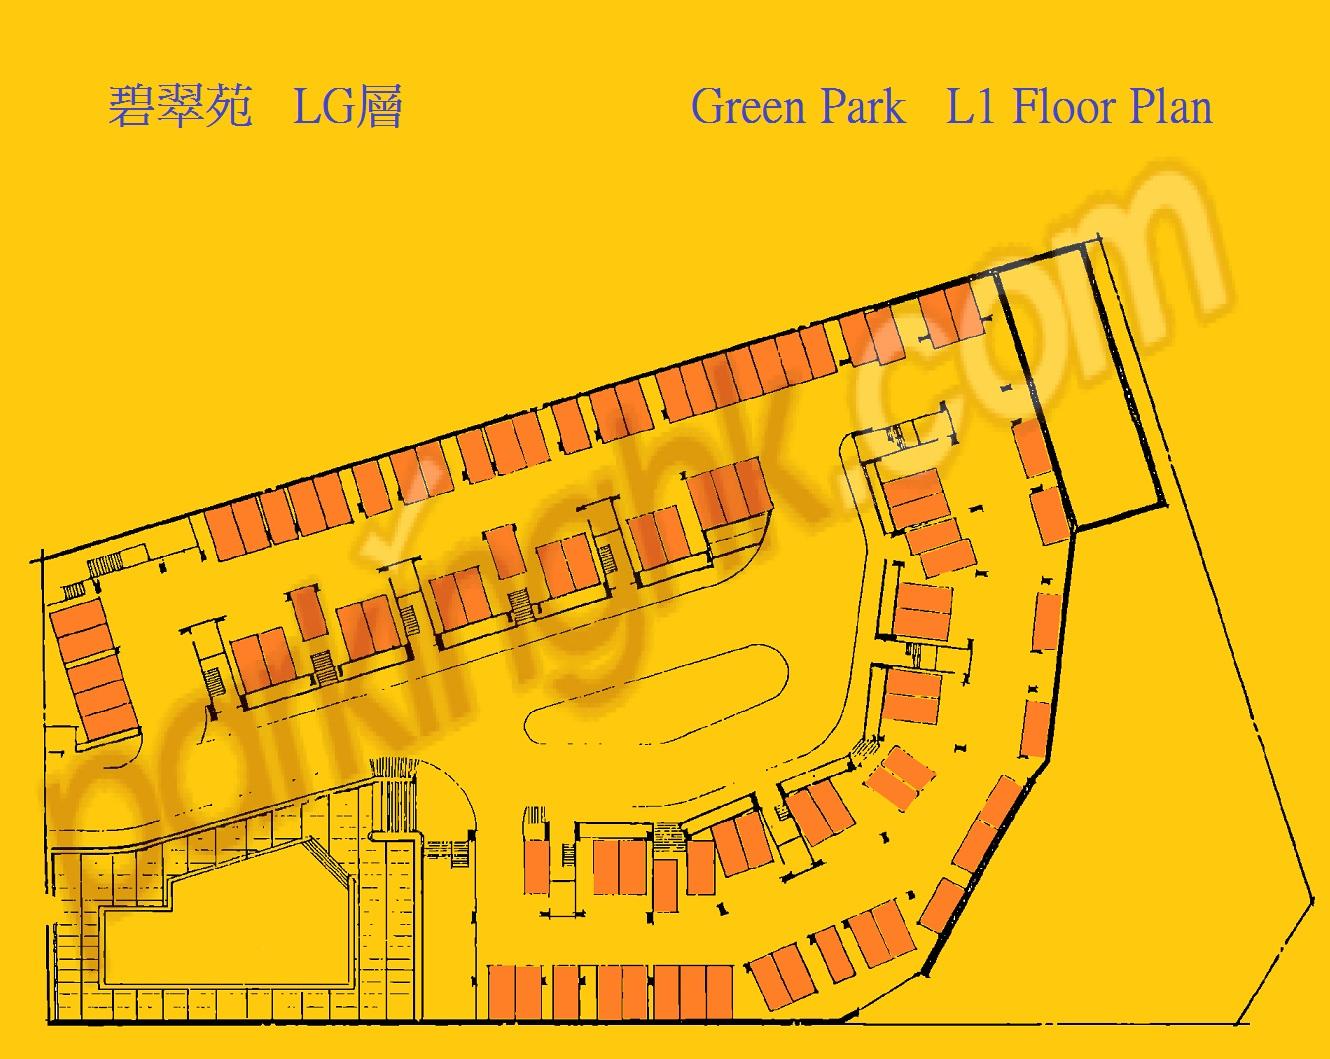  Clear Water Bay Carpark  Razor Hill Road  Green Park  Floor plan 香港車位.com ParkingHK.com